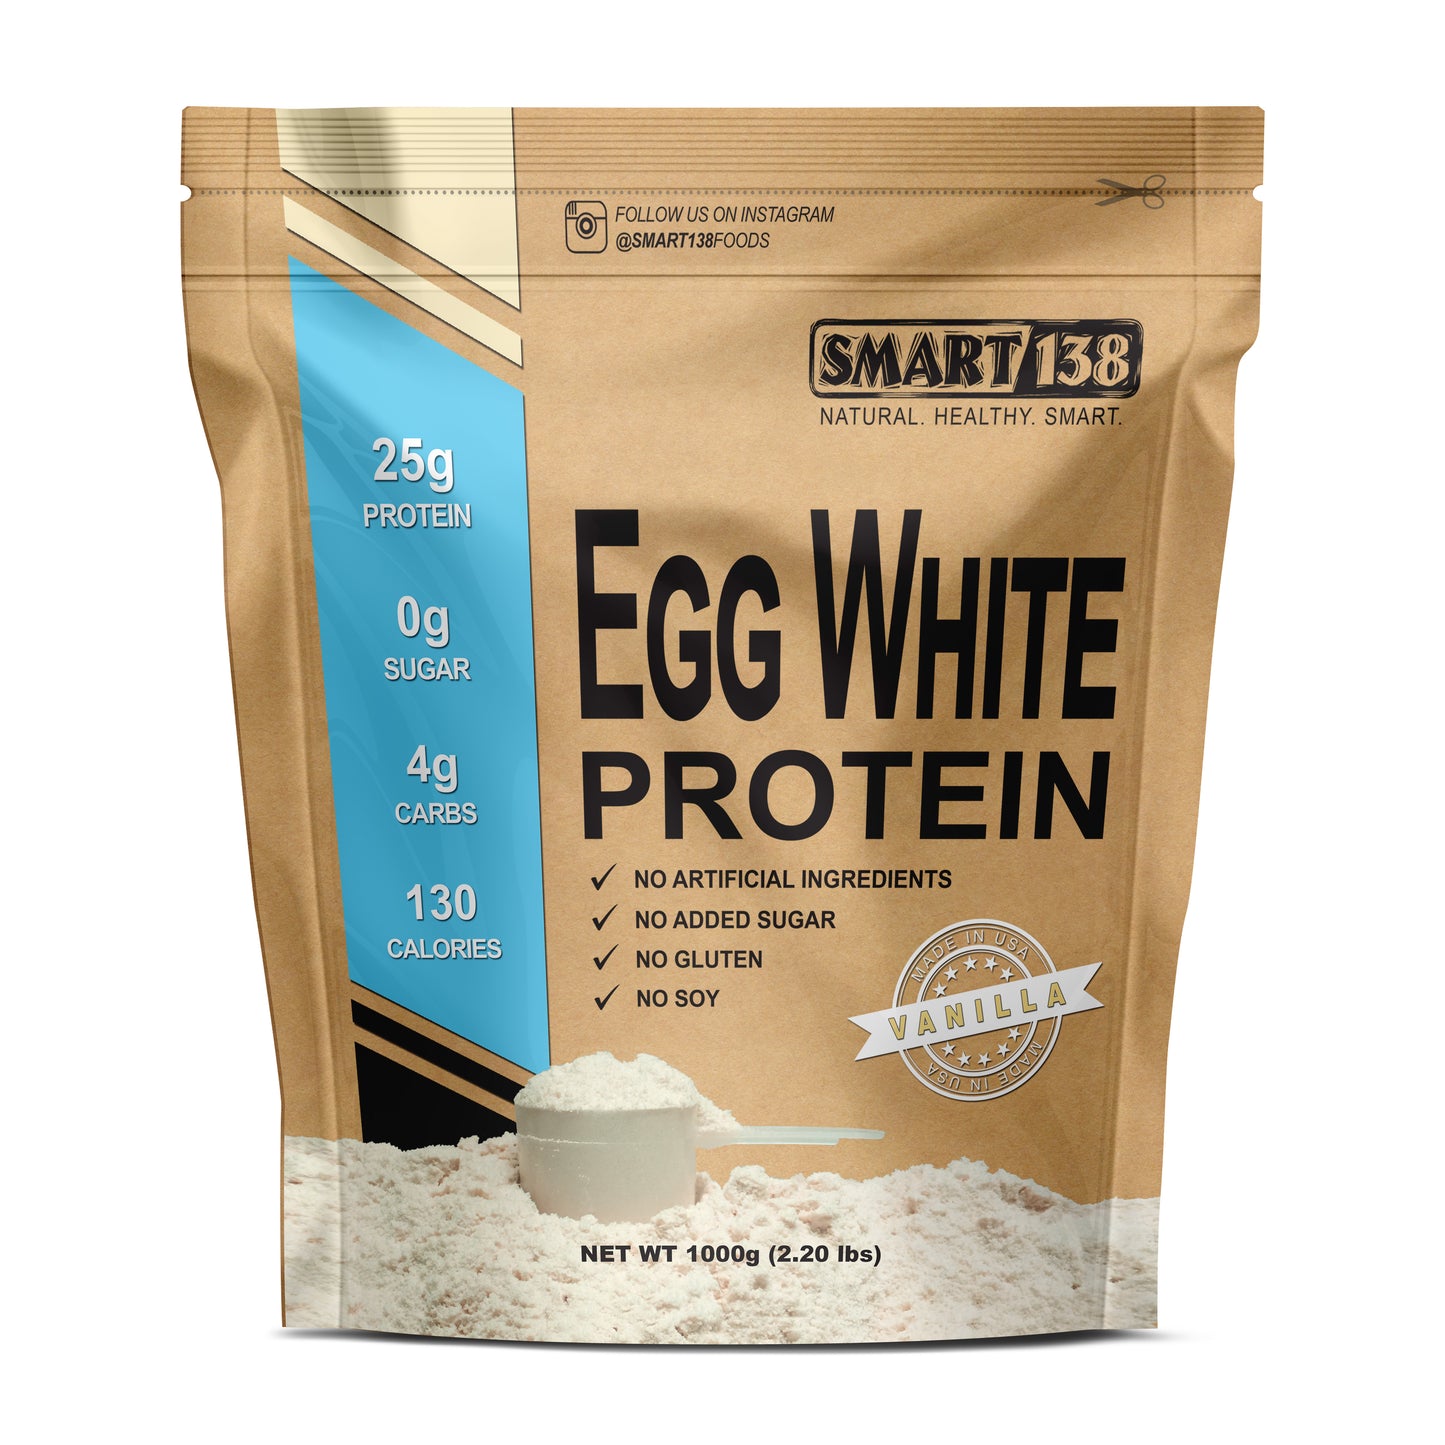 Egg White Protein - Smart 138 foods 